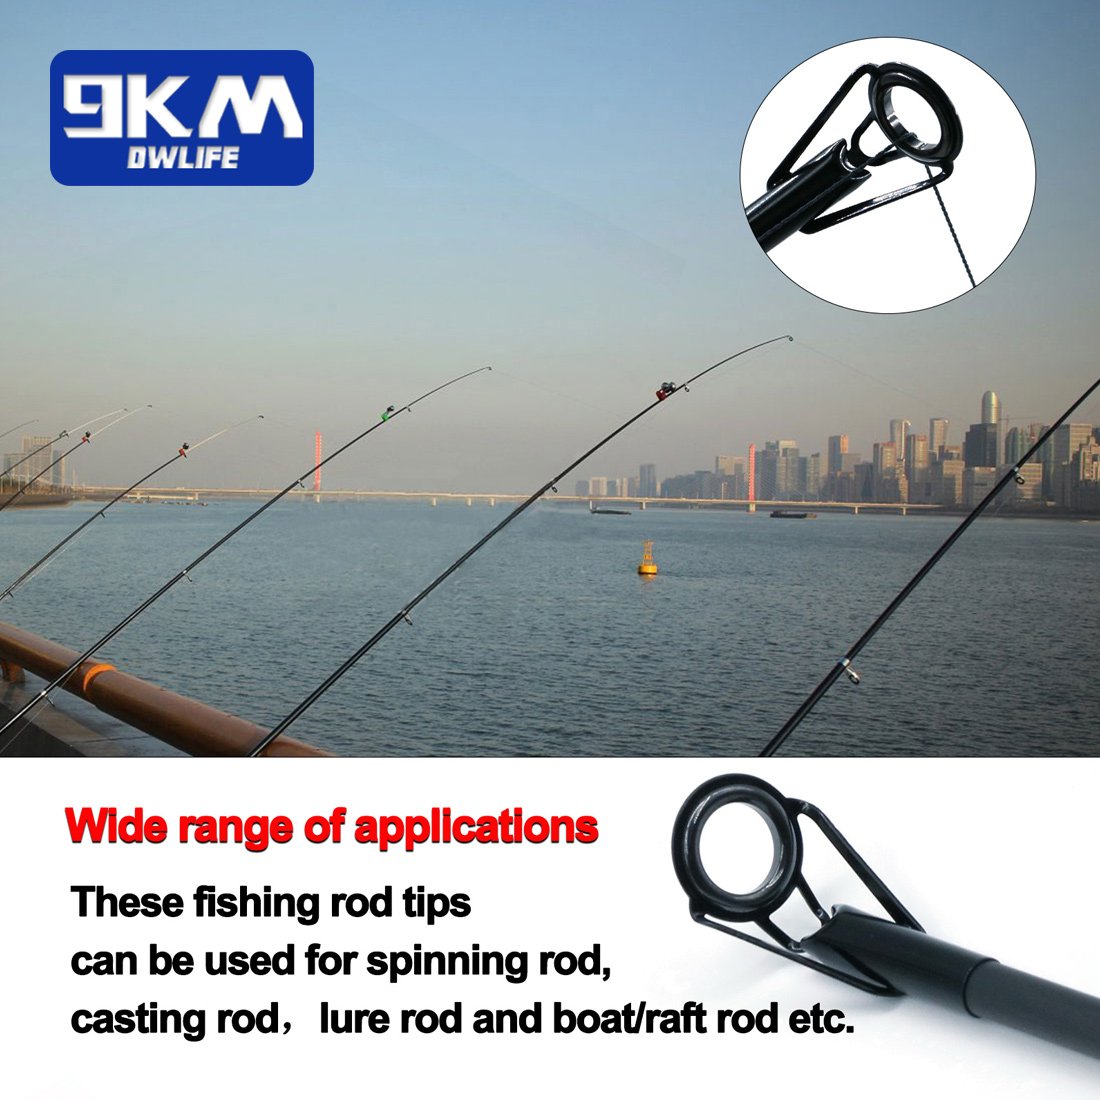 Fishing Rod Tip Repair Kit Pole Tips Replacement Kit Stainless Steel C –  9km-dwlife